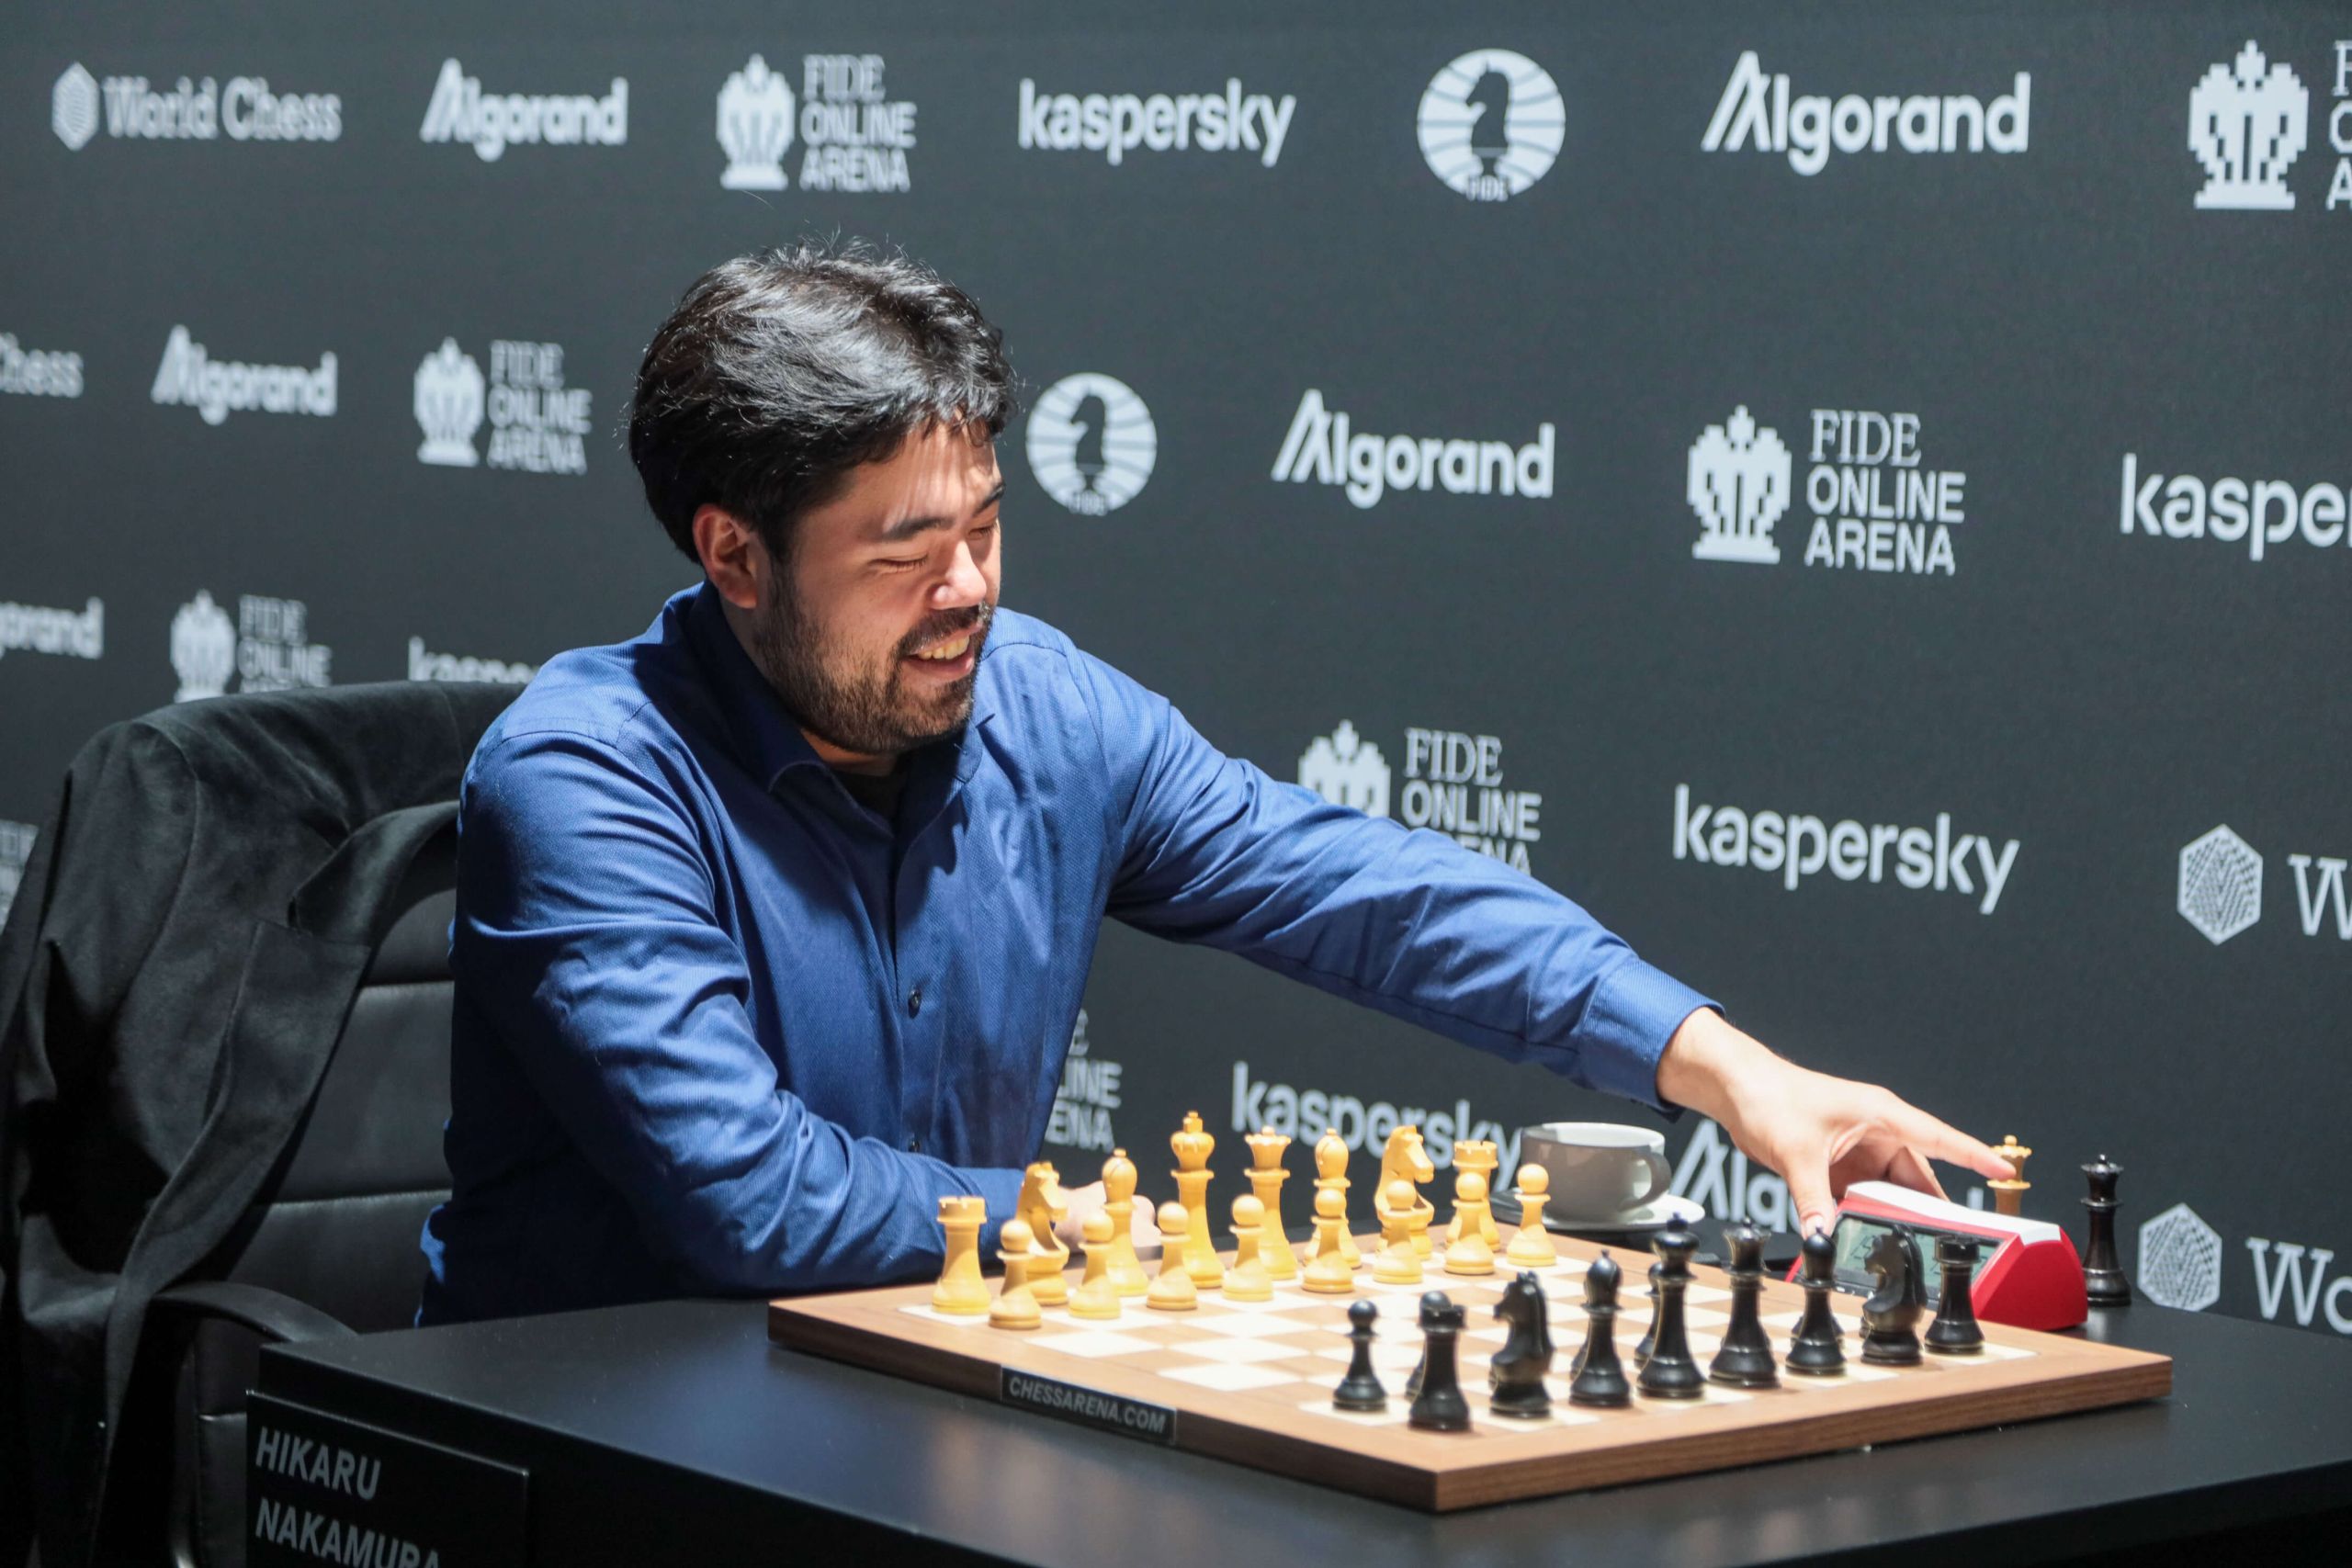 FIDE Grand Prix Berlin: So and Mamedyarov advance to semifinals